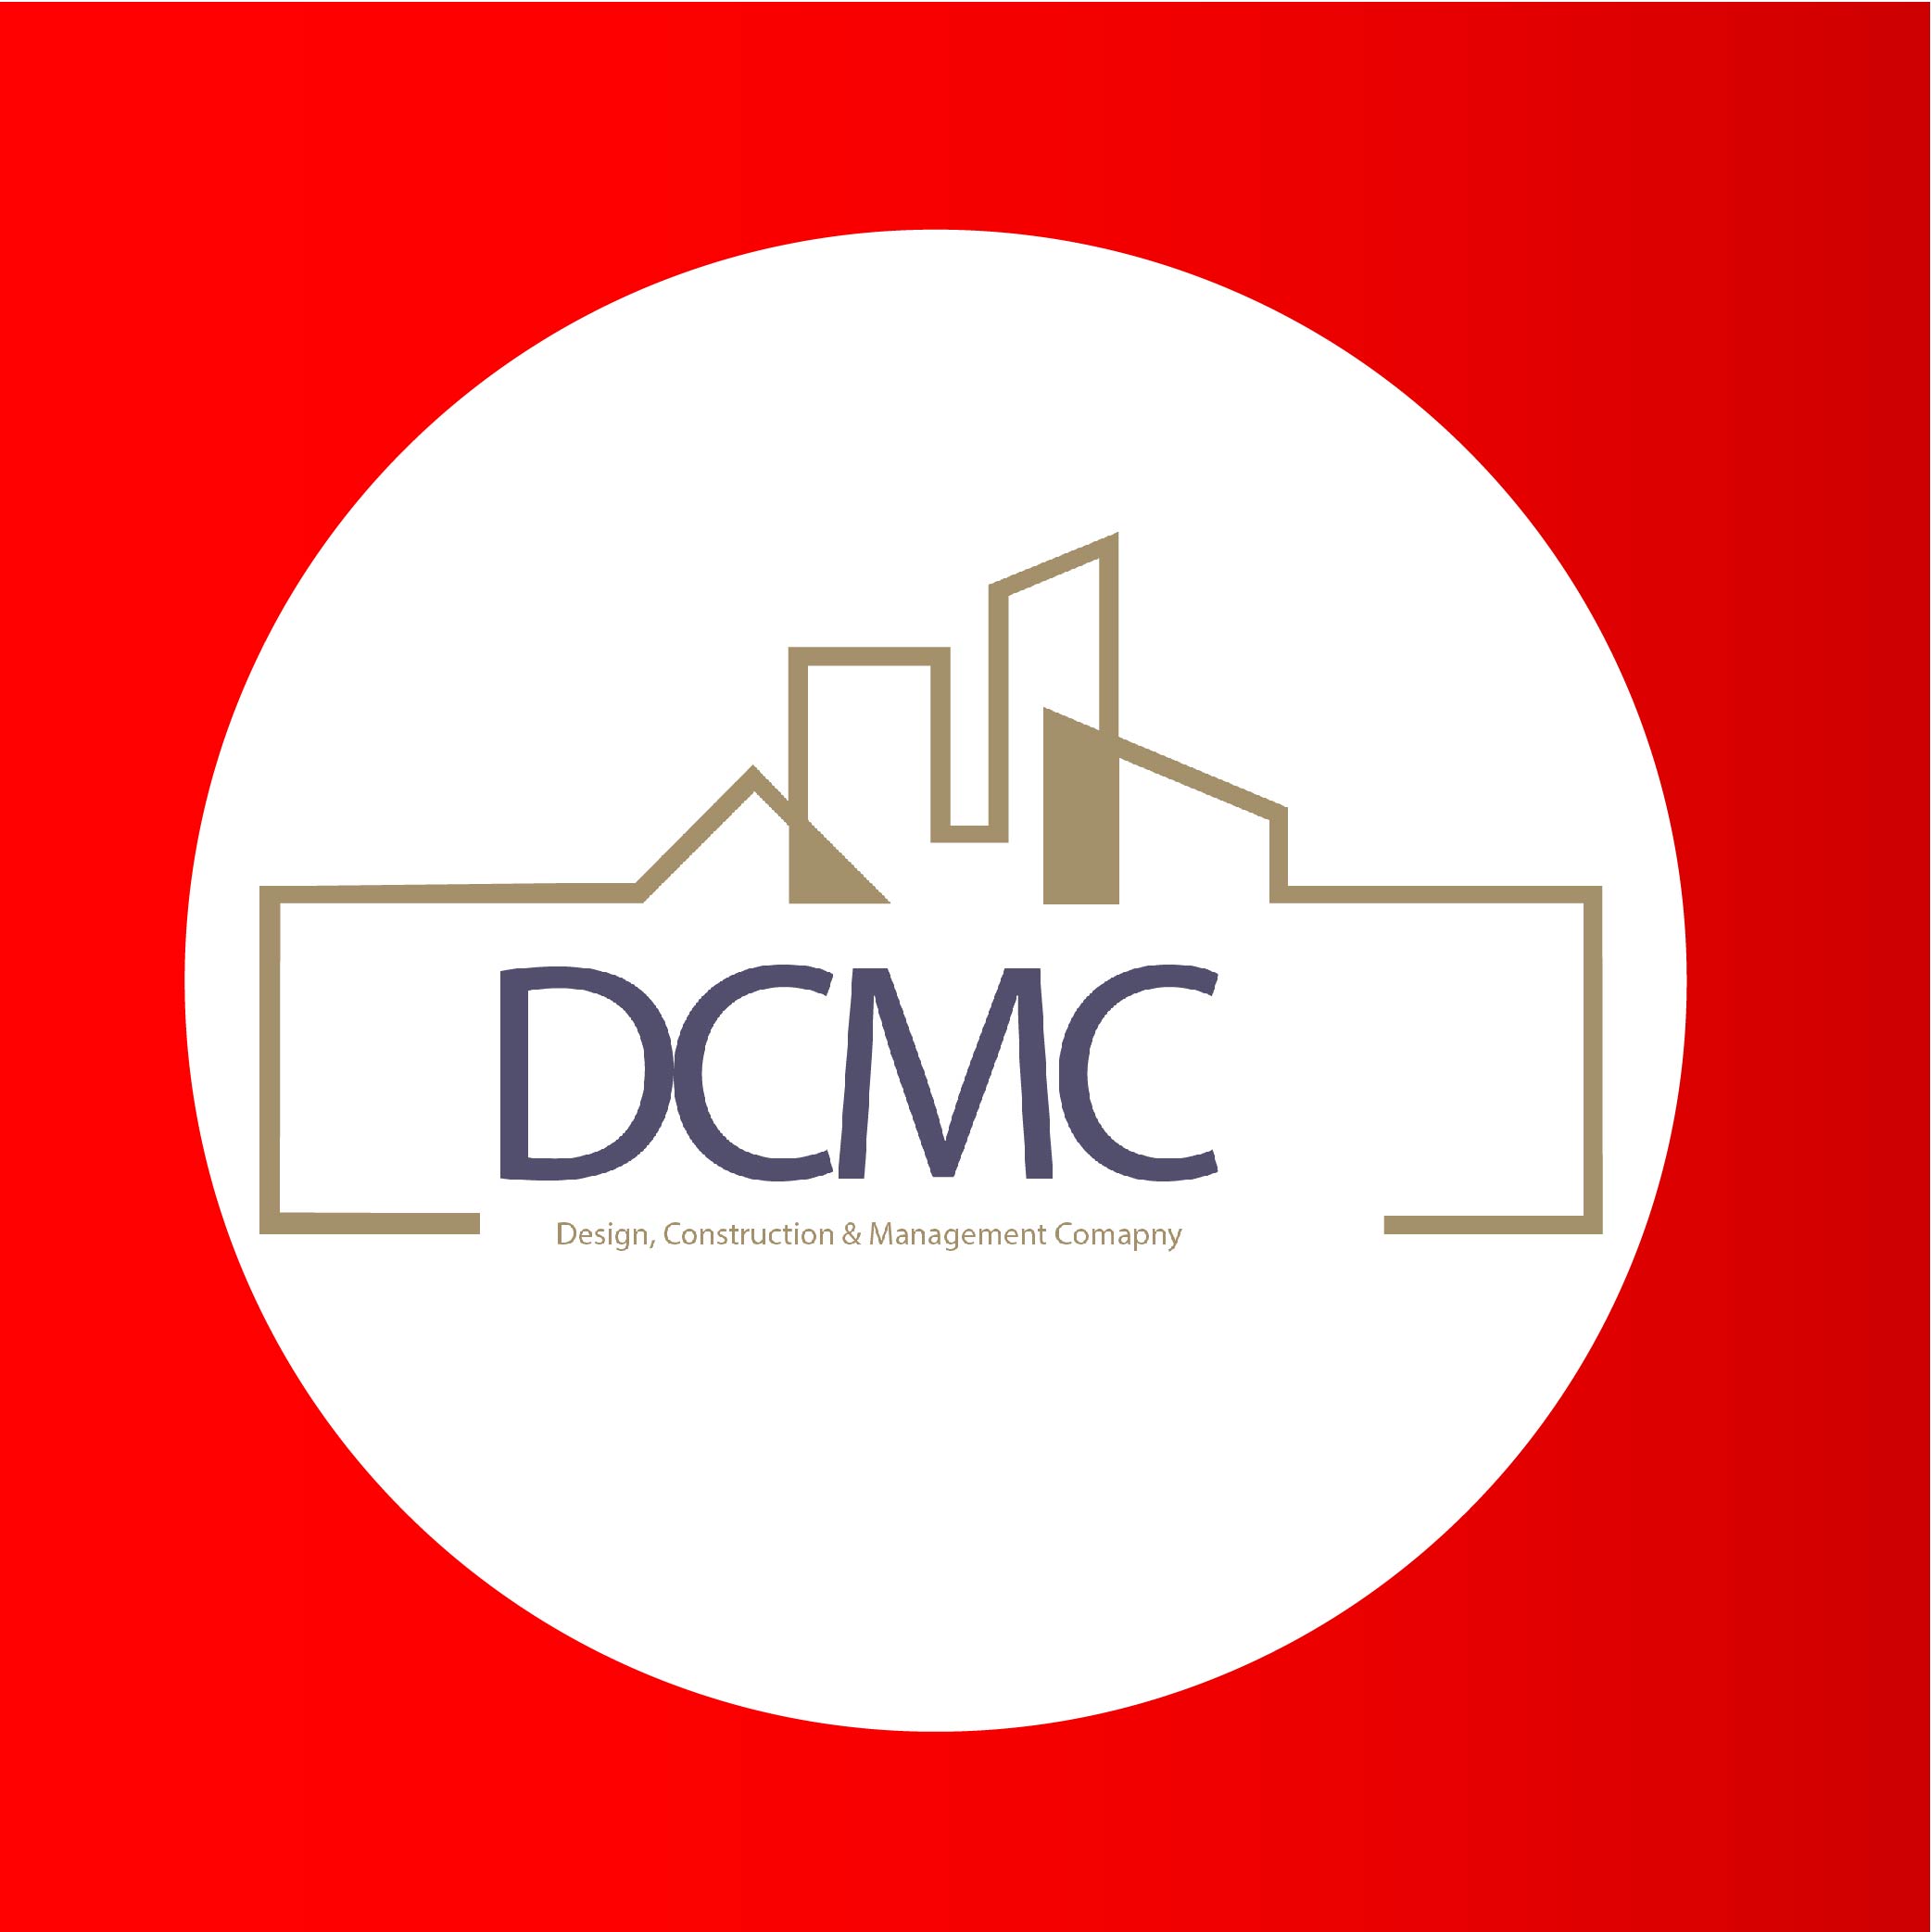 DCMC